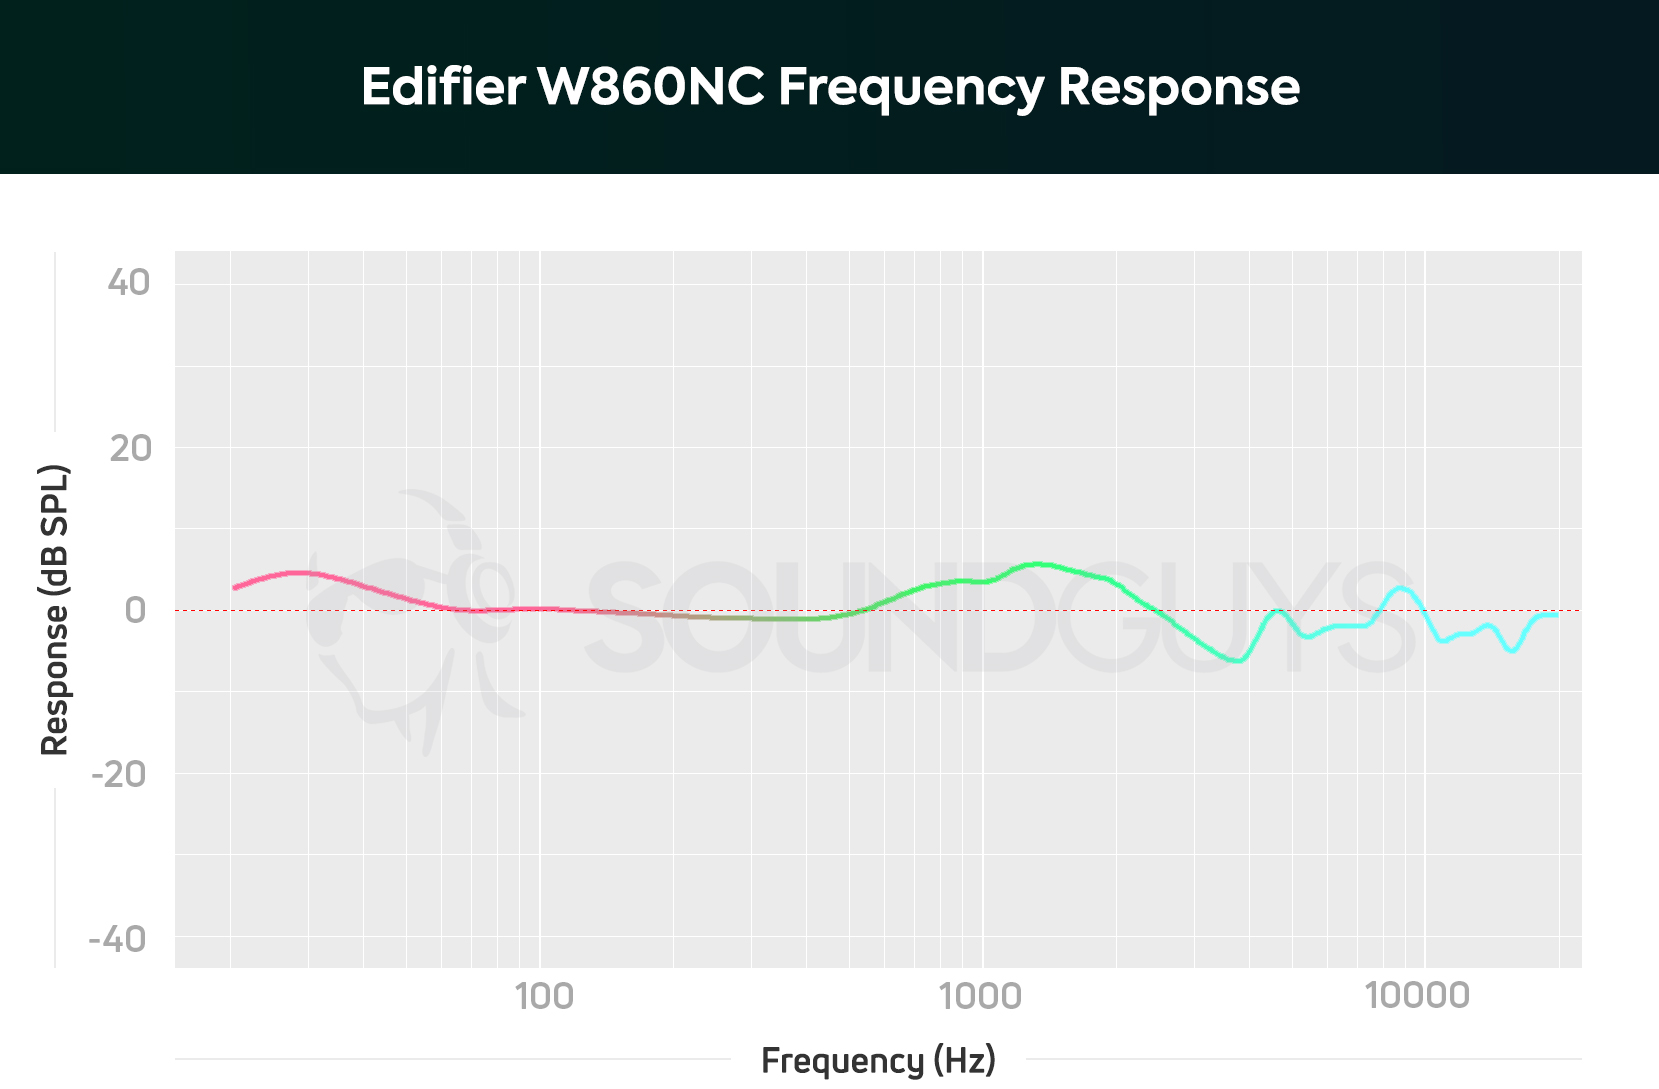 Edifier W860NB frequency response chart.